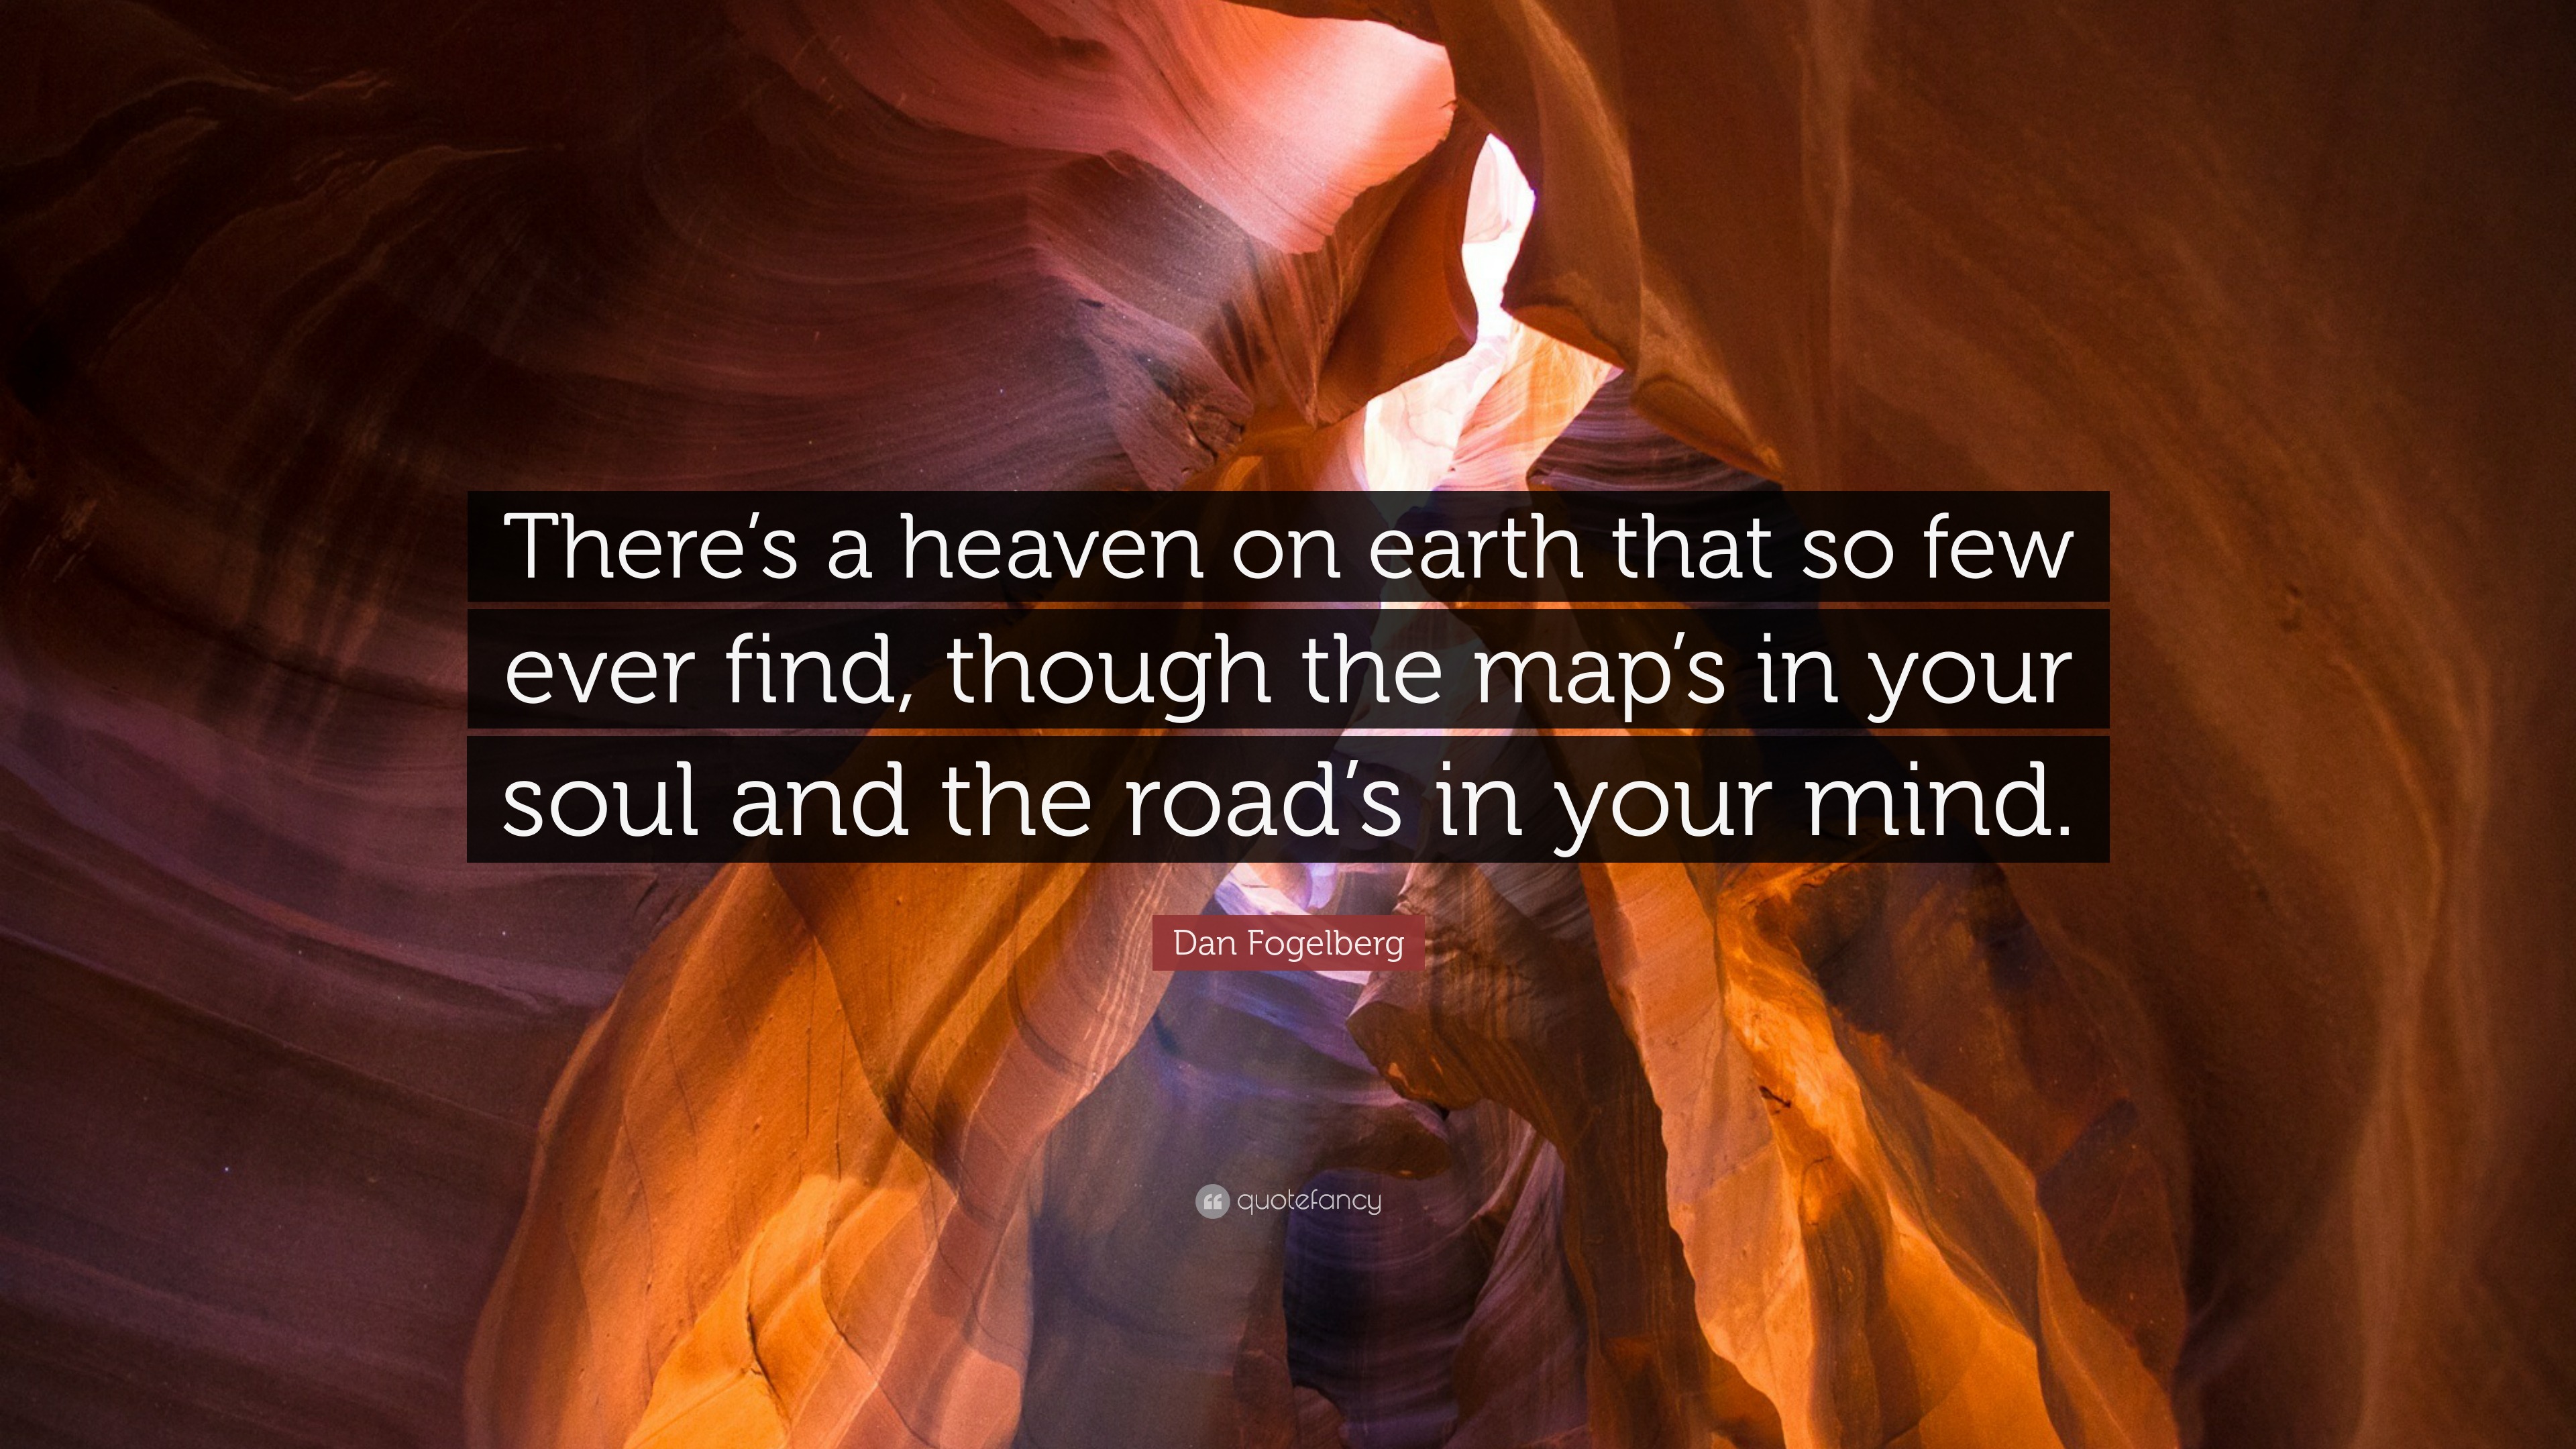 Finding Heaven on Earth!